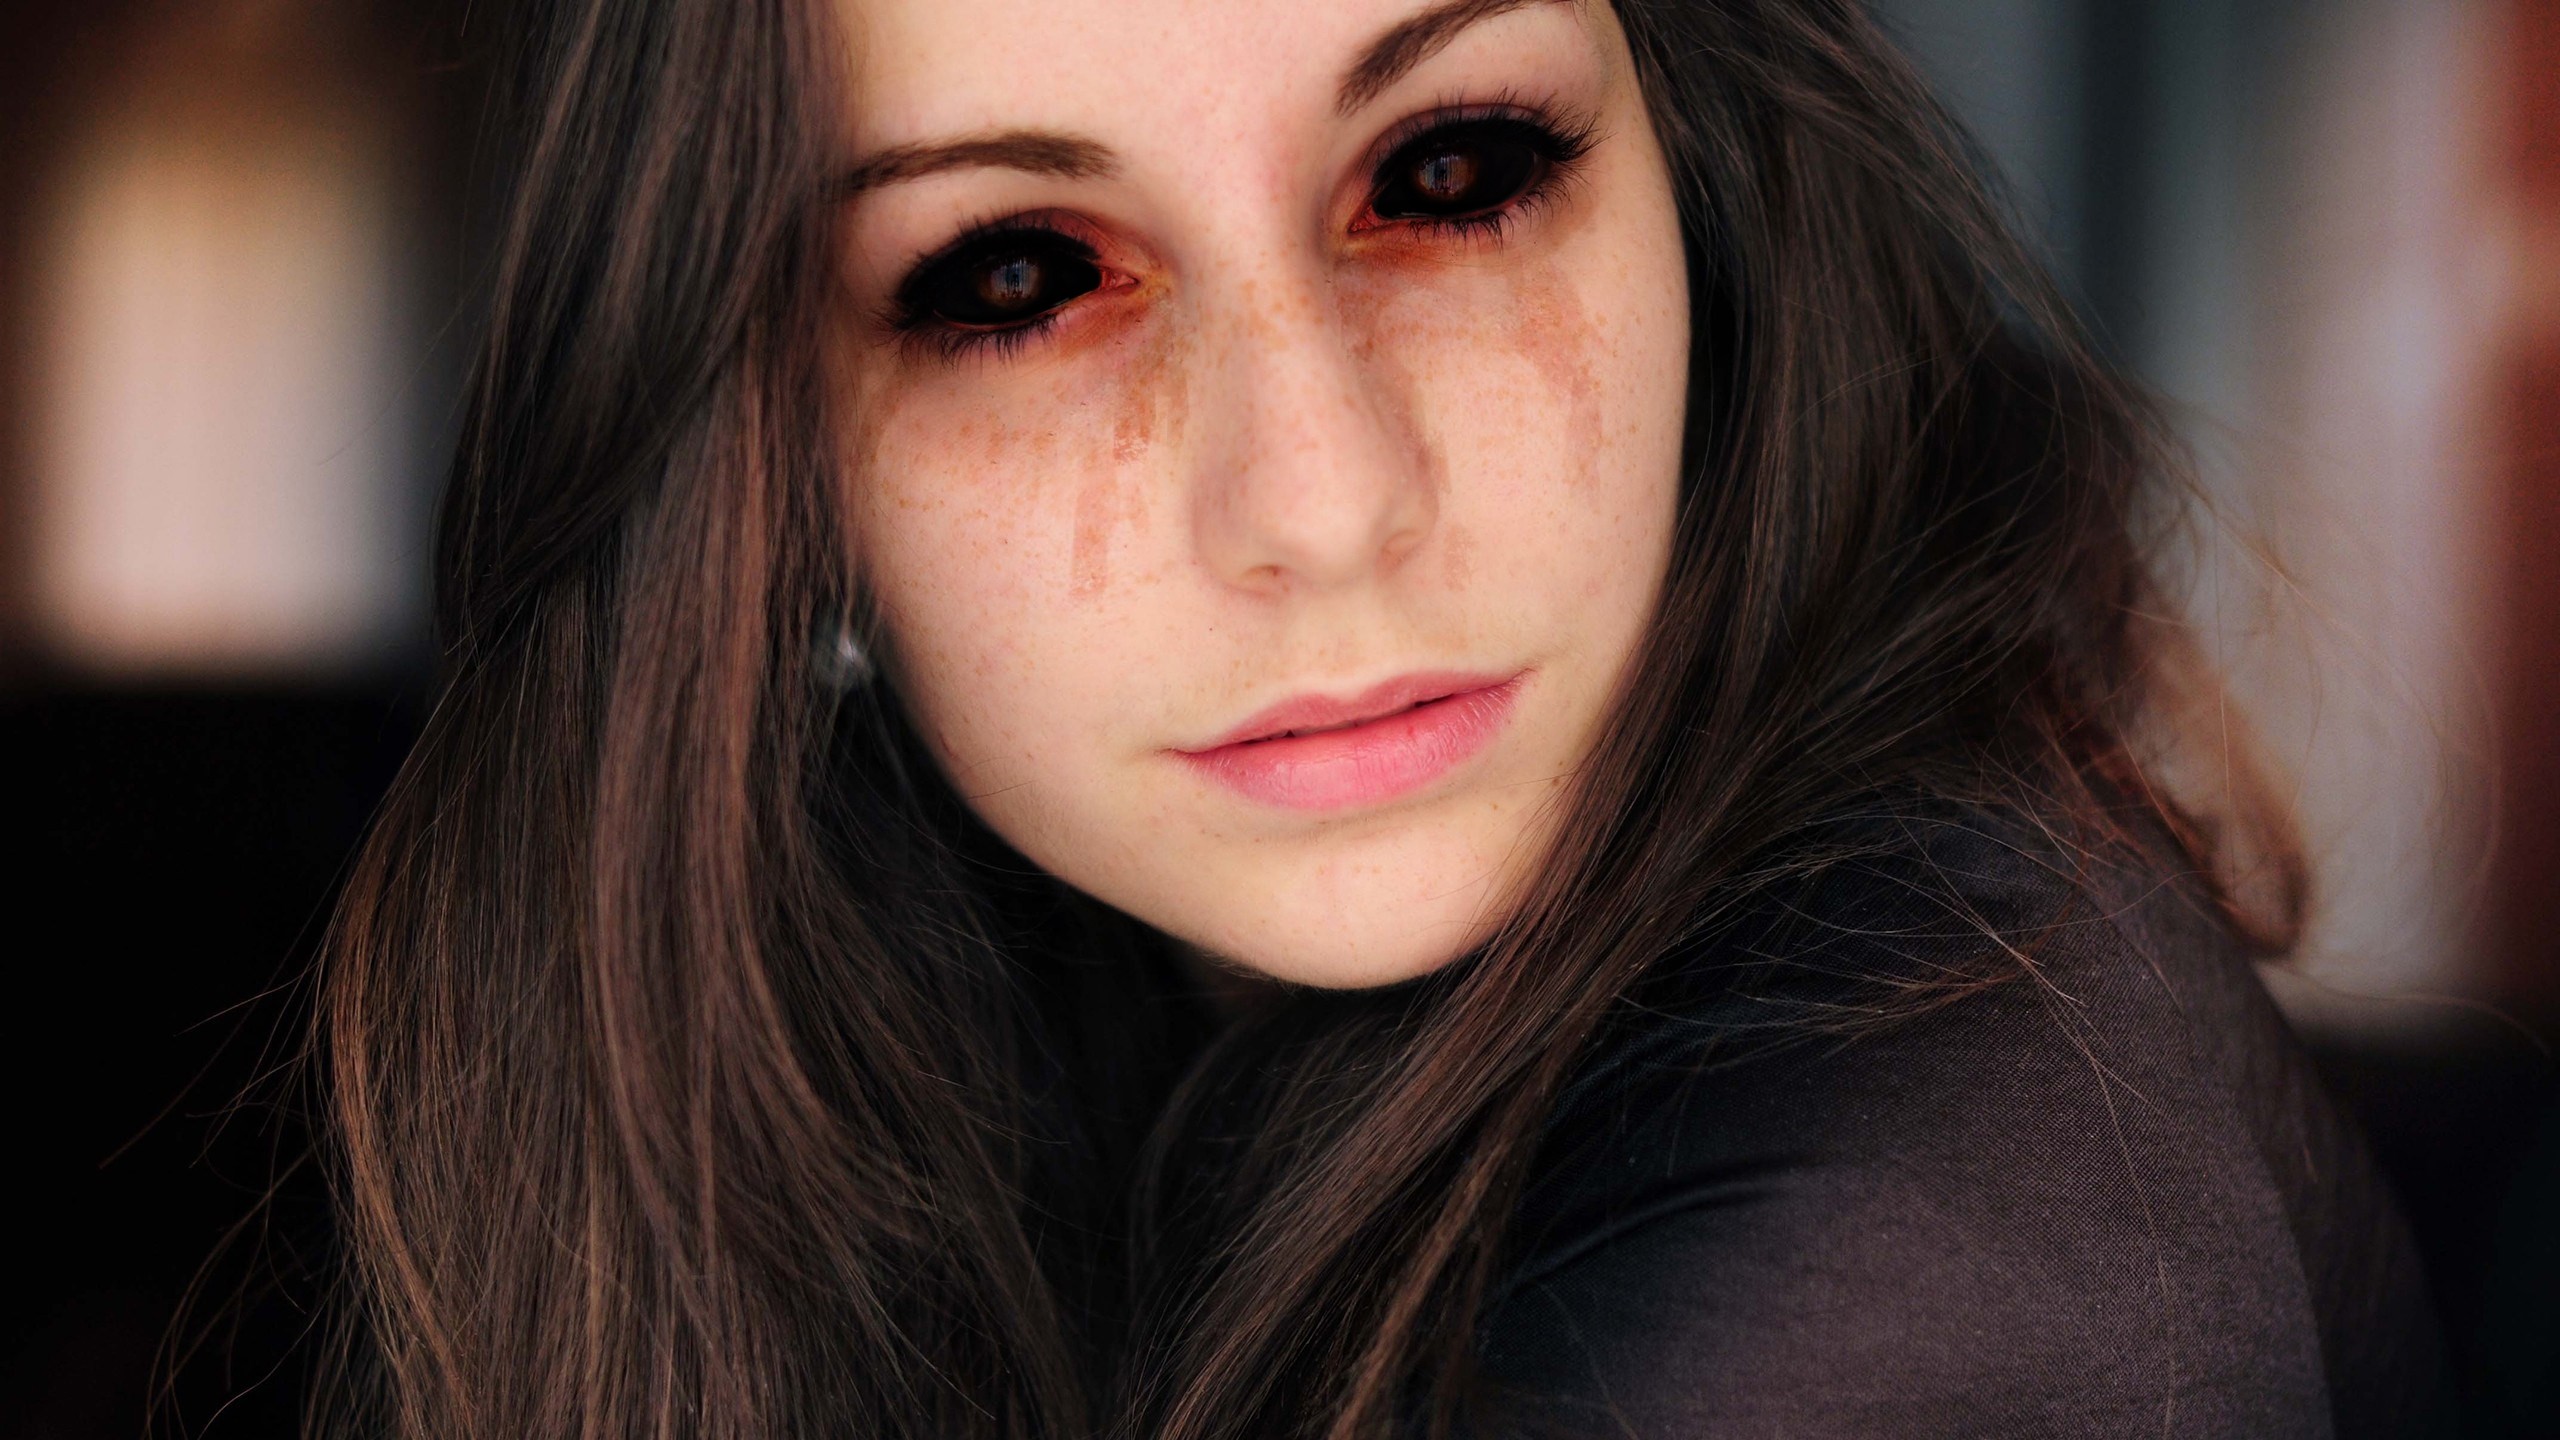 Spooky black eyes creepy women face dark eyes long hair